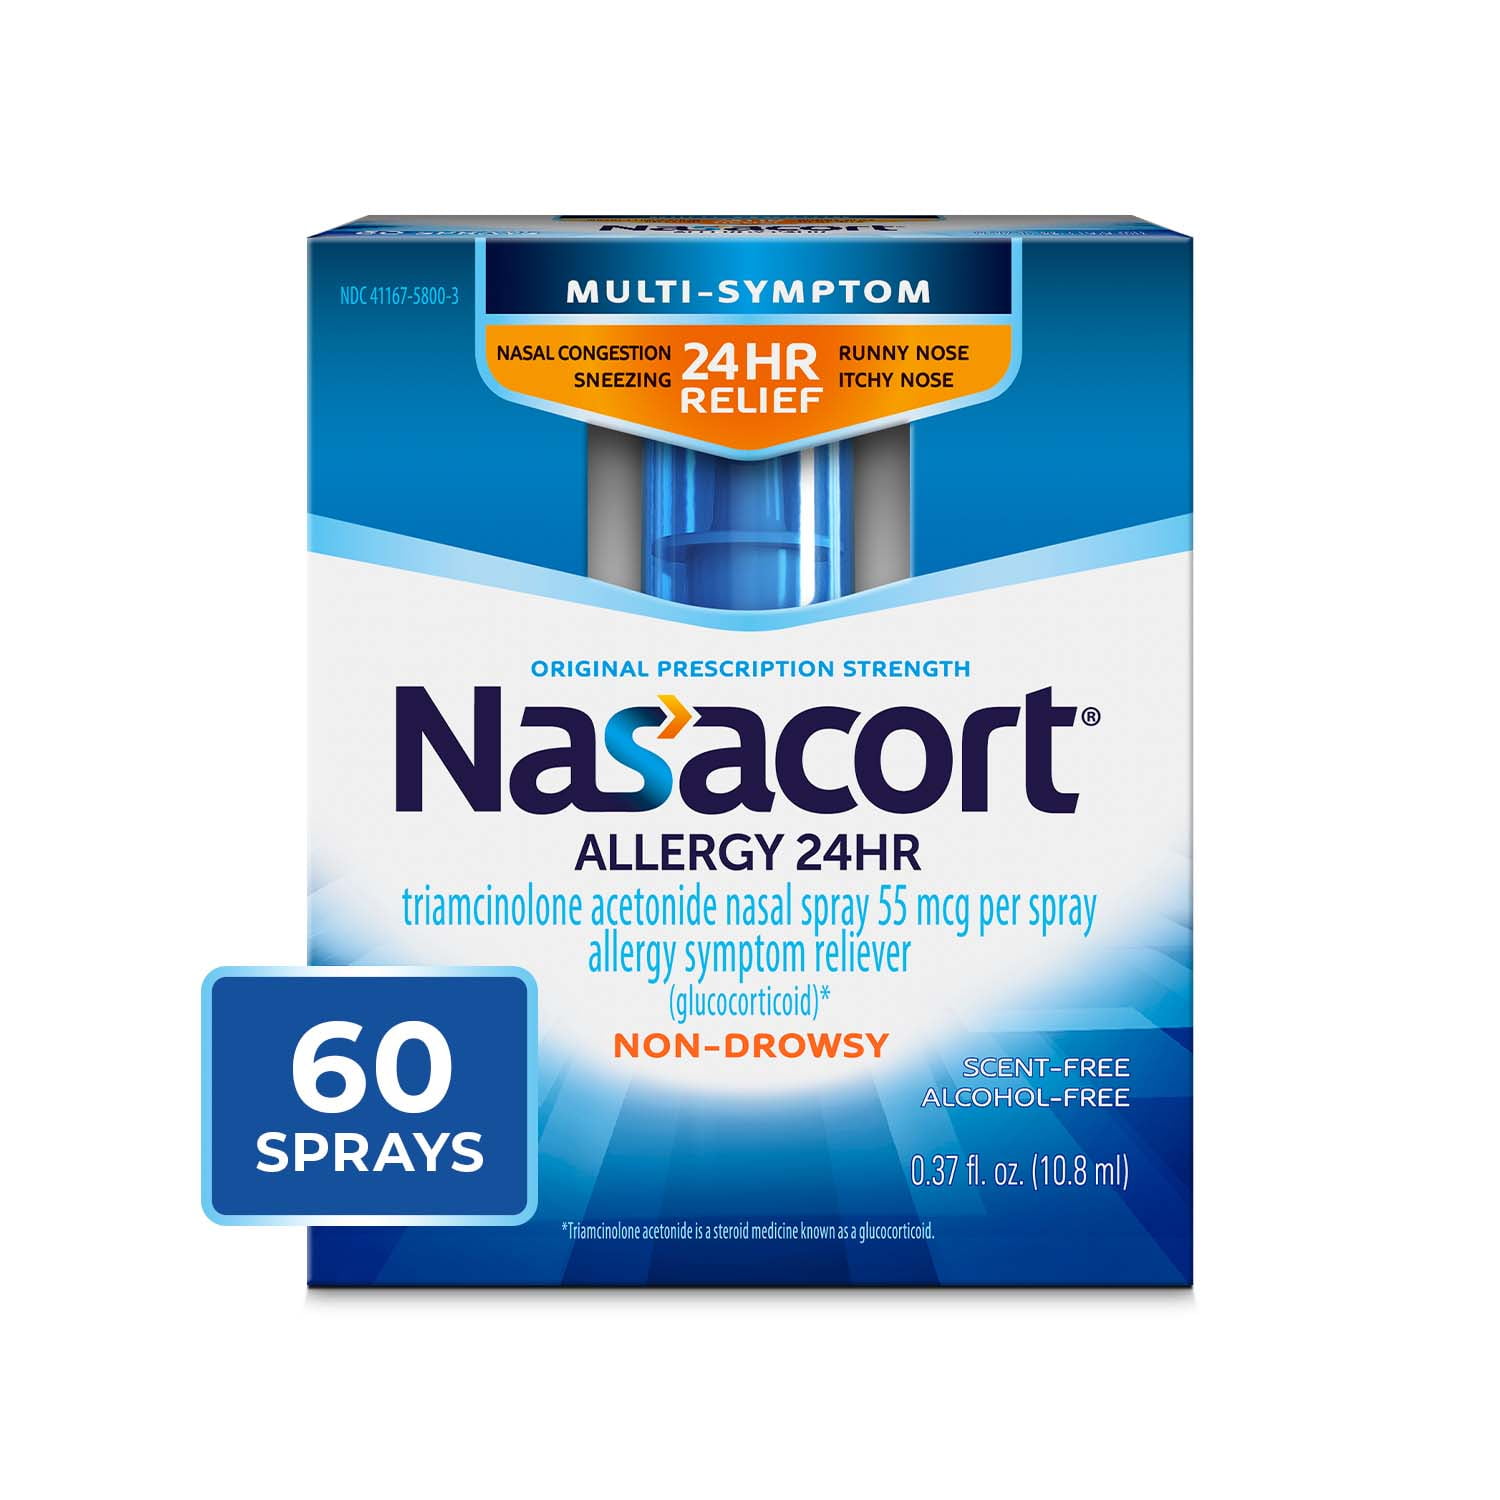 Nasacort 24HR Allergy Nasal Spray, Non-drowsy, 60 Sprays, 0.37 fl. oz.